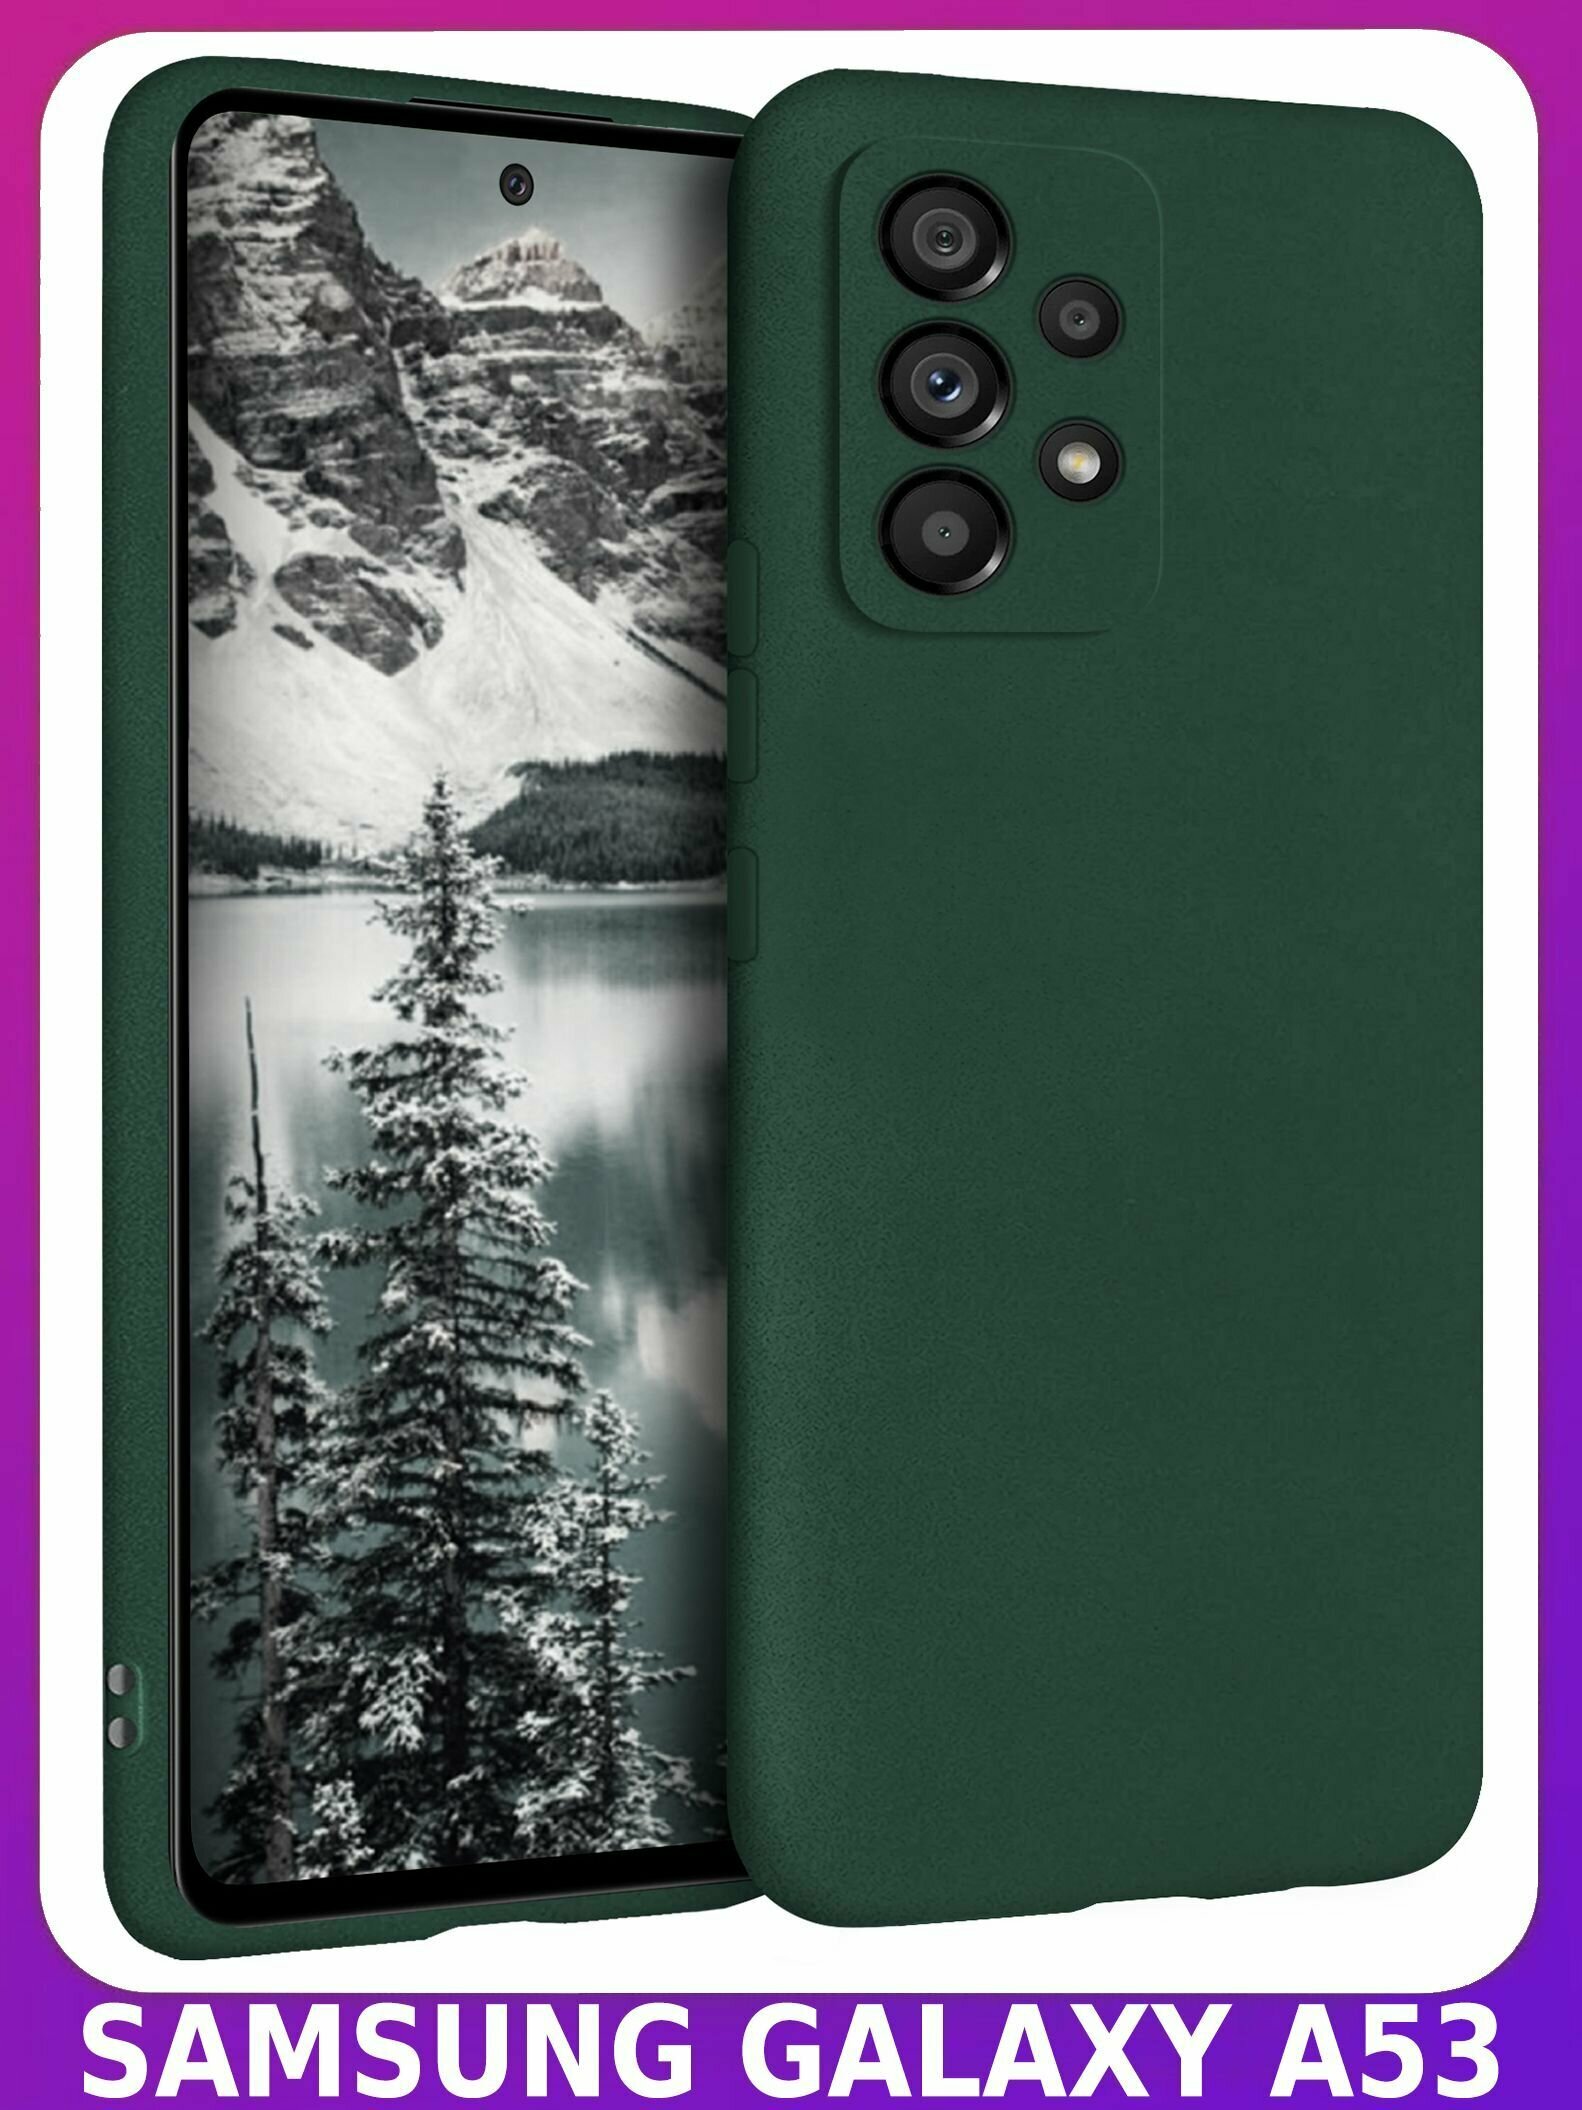 Темно-зеленый Soft Touch чехол класса Прeмиyм для SАMSUNG GАLAXY A53